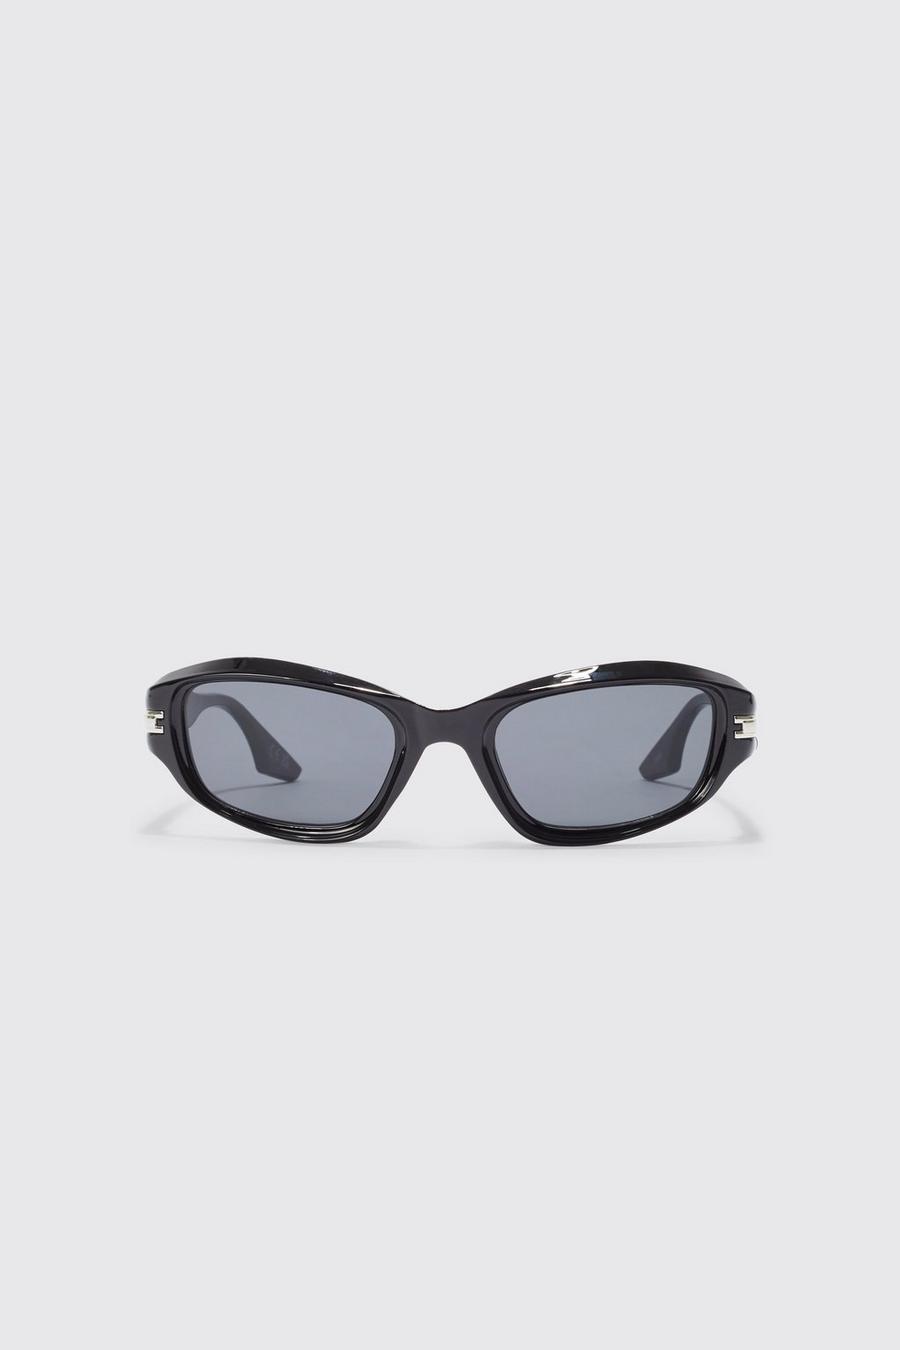 Black schwarz Angled Lens Sunglasses